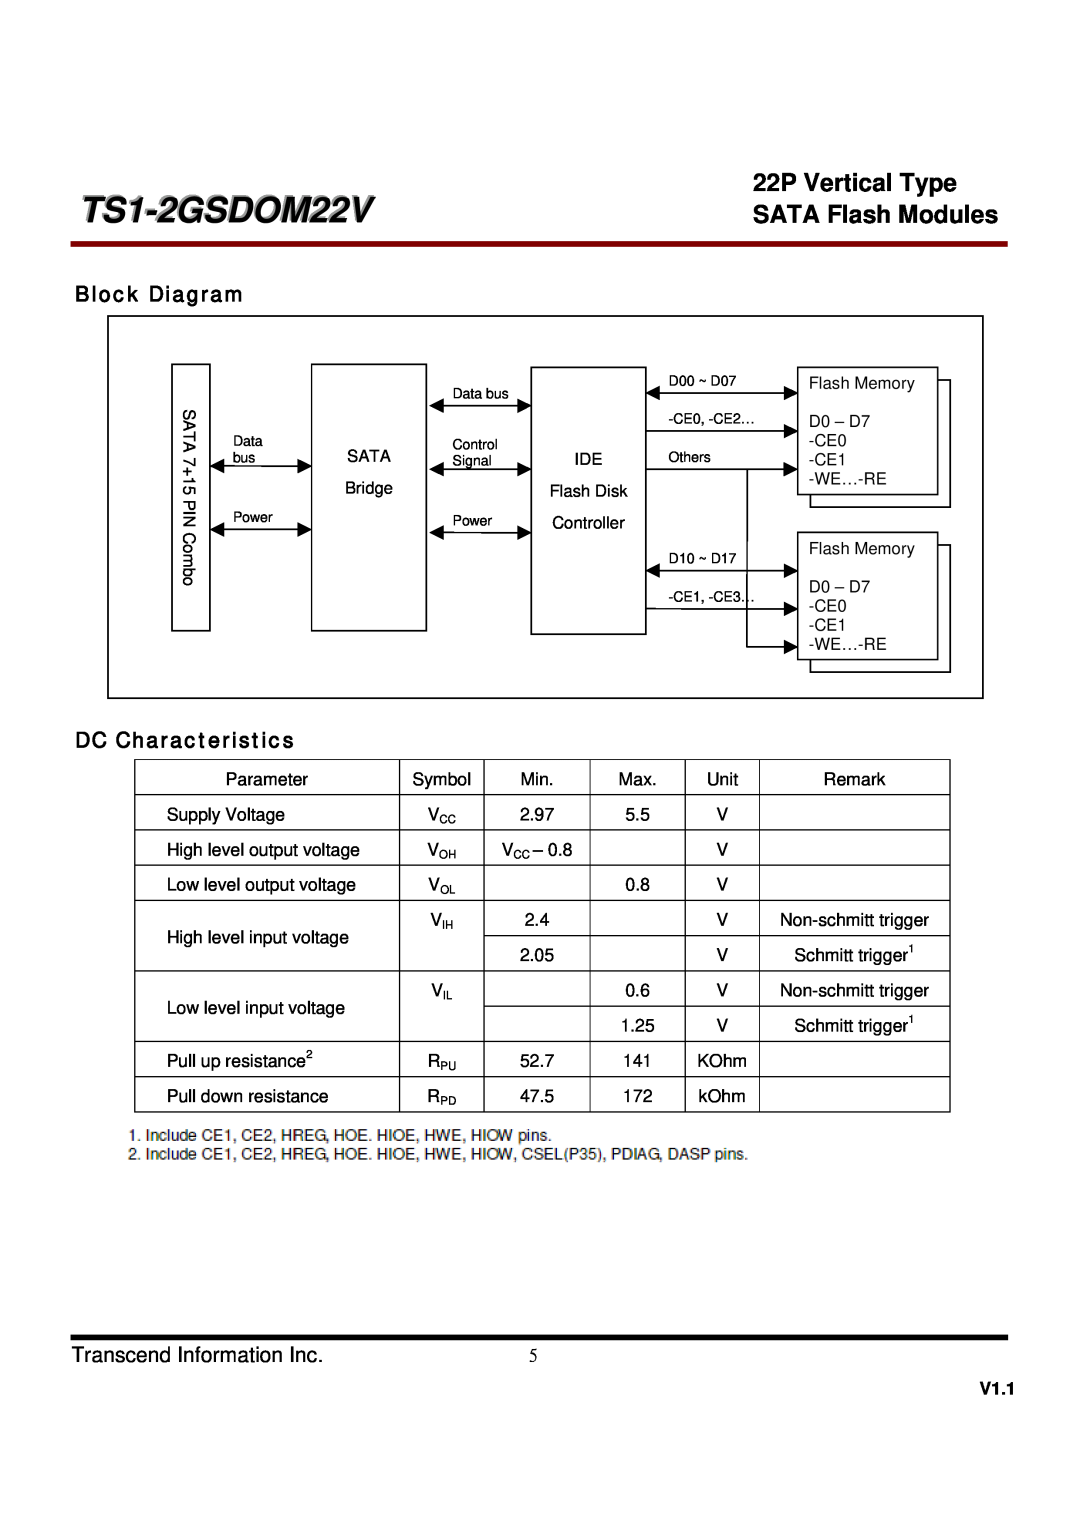 Transcend Information TS1GSDOM22V Block Diagram, DC Characteristics, TS1-2GSDOM22V, 22P Vertical Type, SATA Flash Modules 